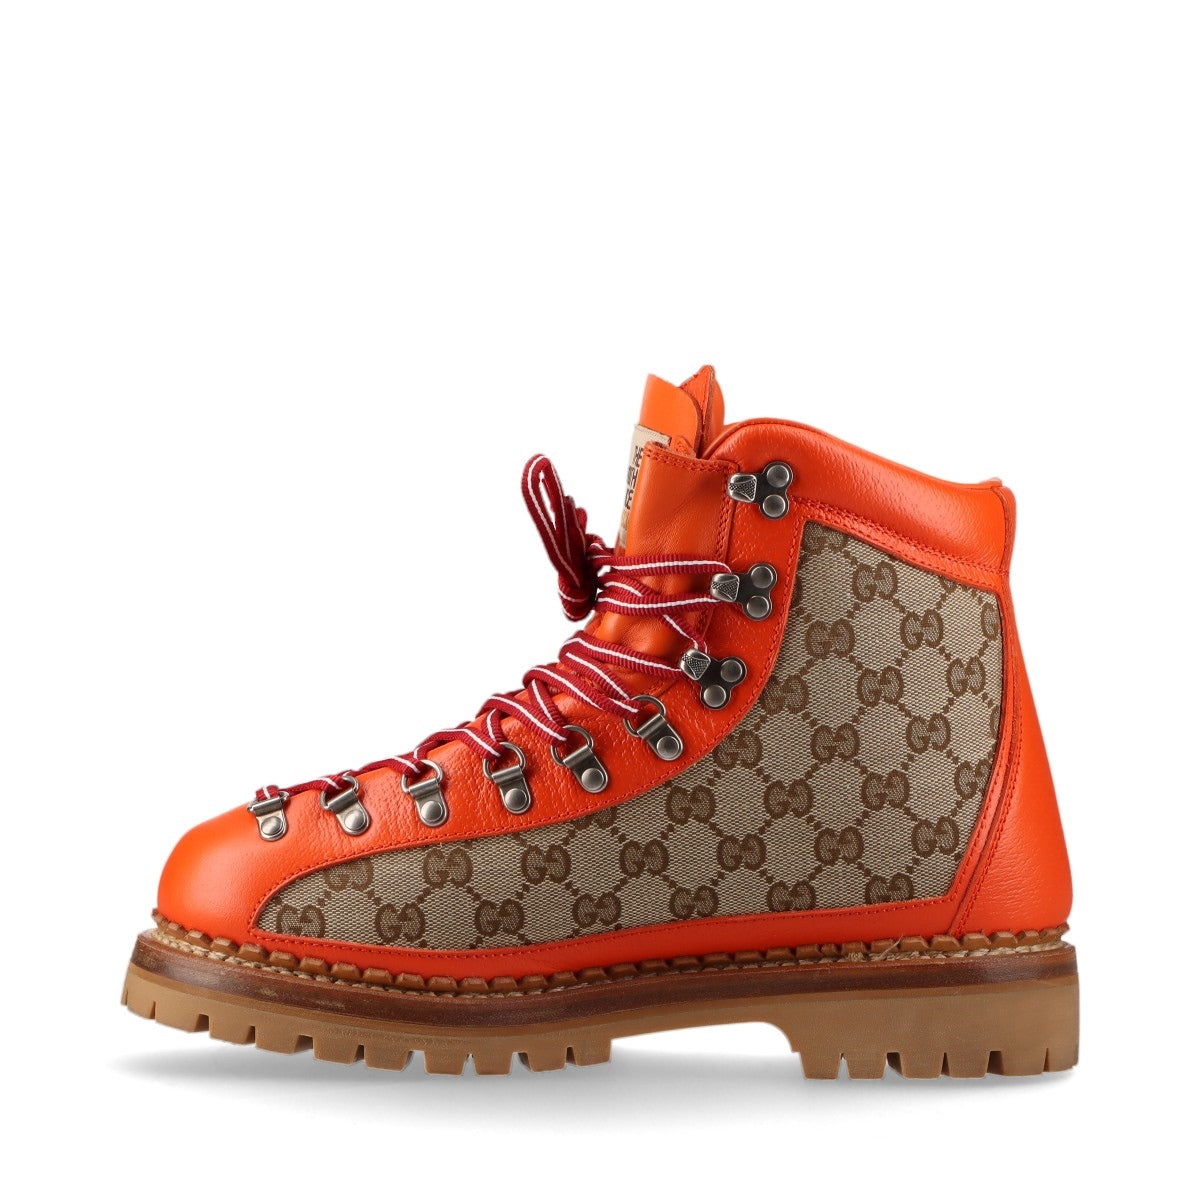 Gucci x North Face GG Supreme Canvas & Leather Short Boots US8 Men's Brown x orange 679914